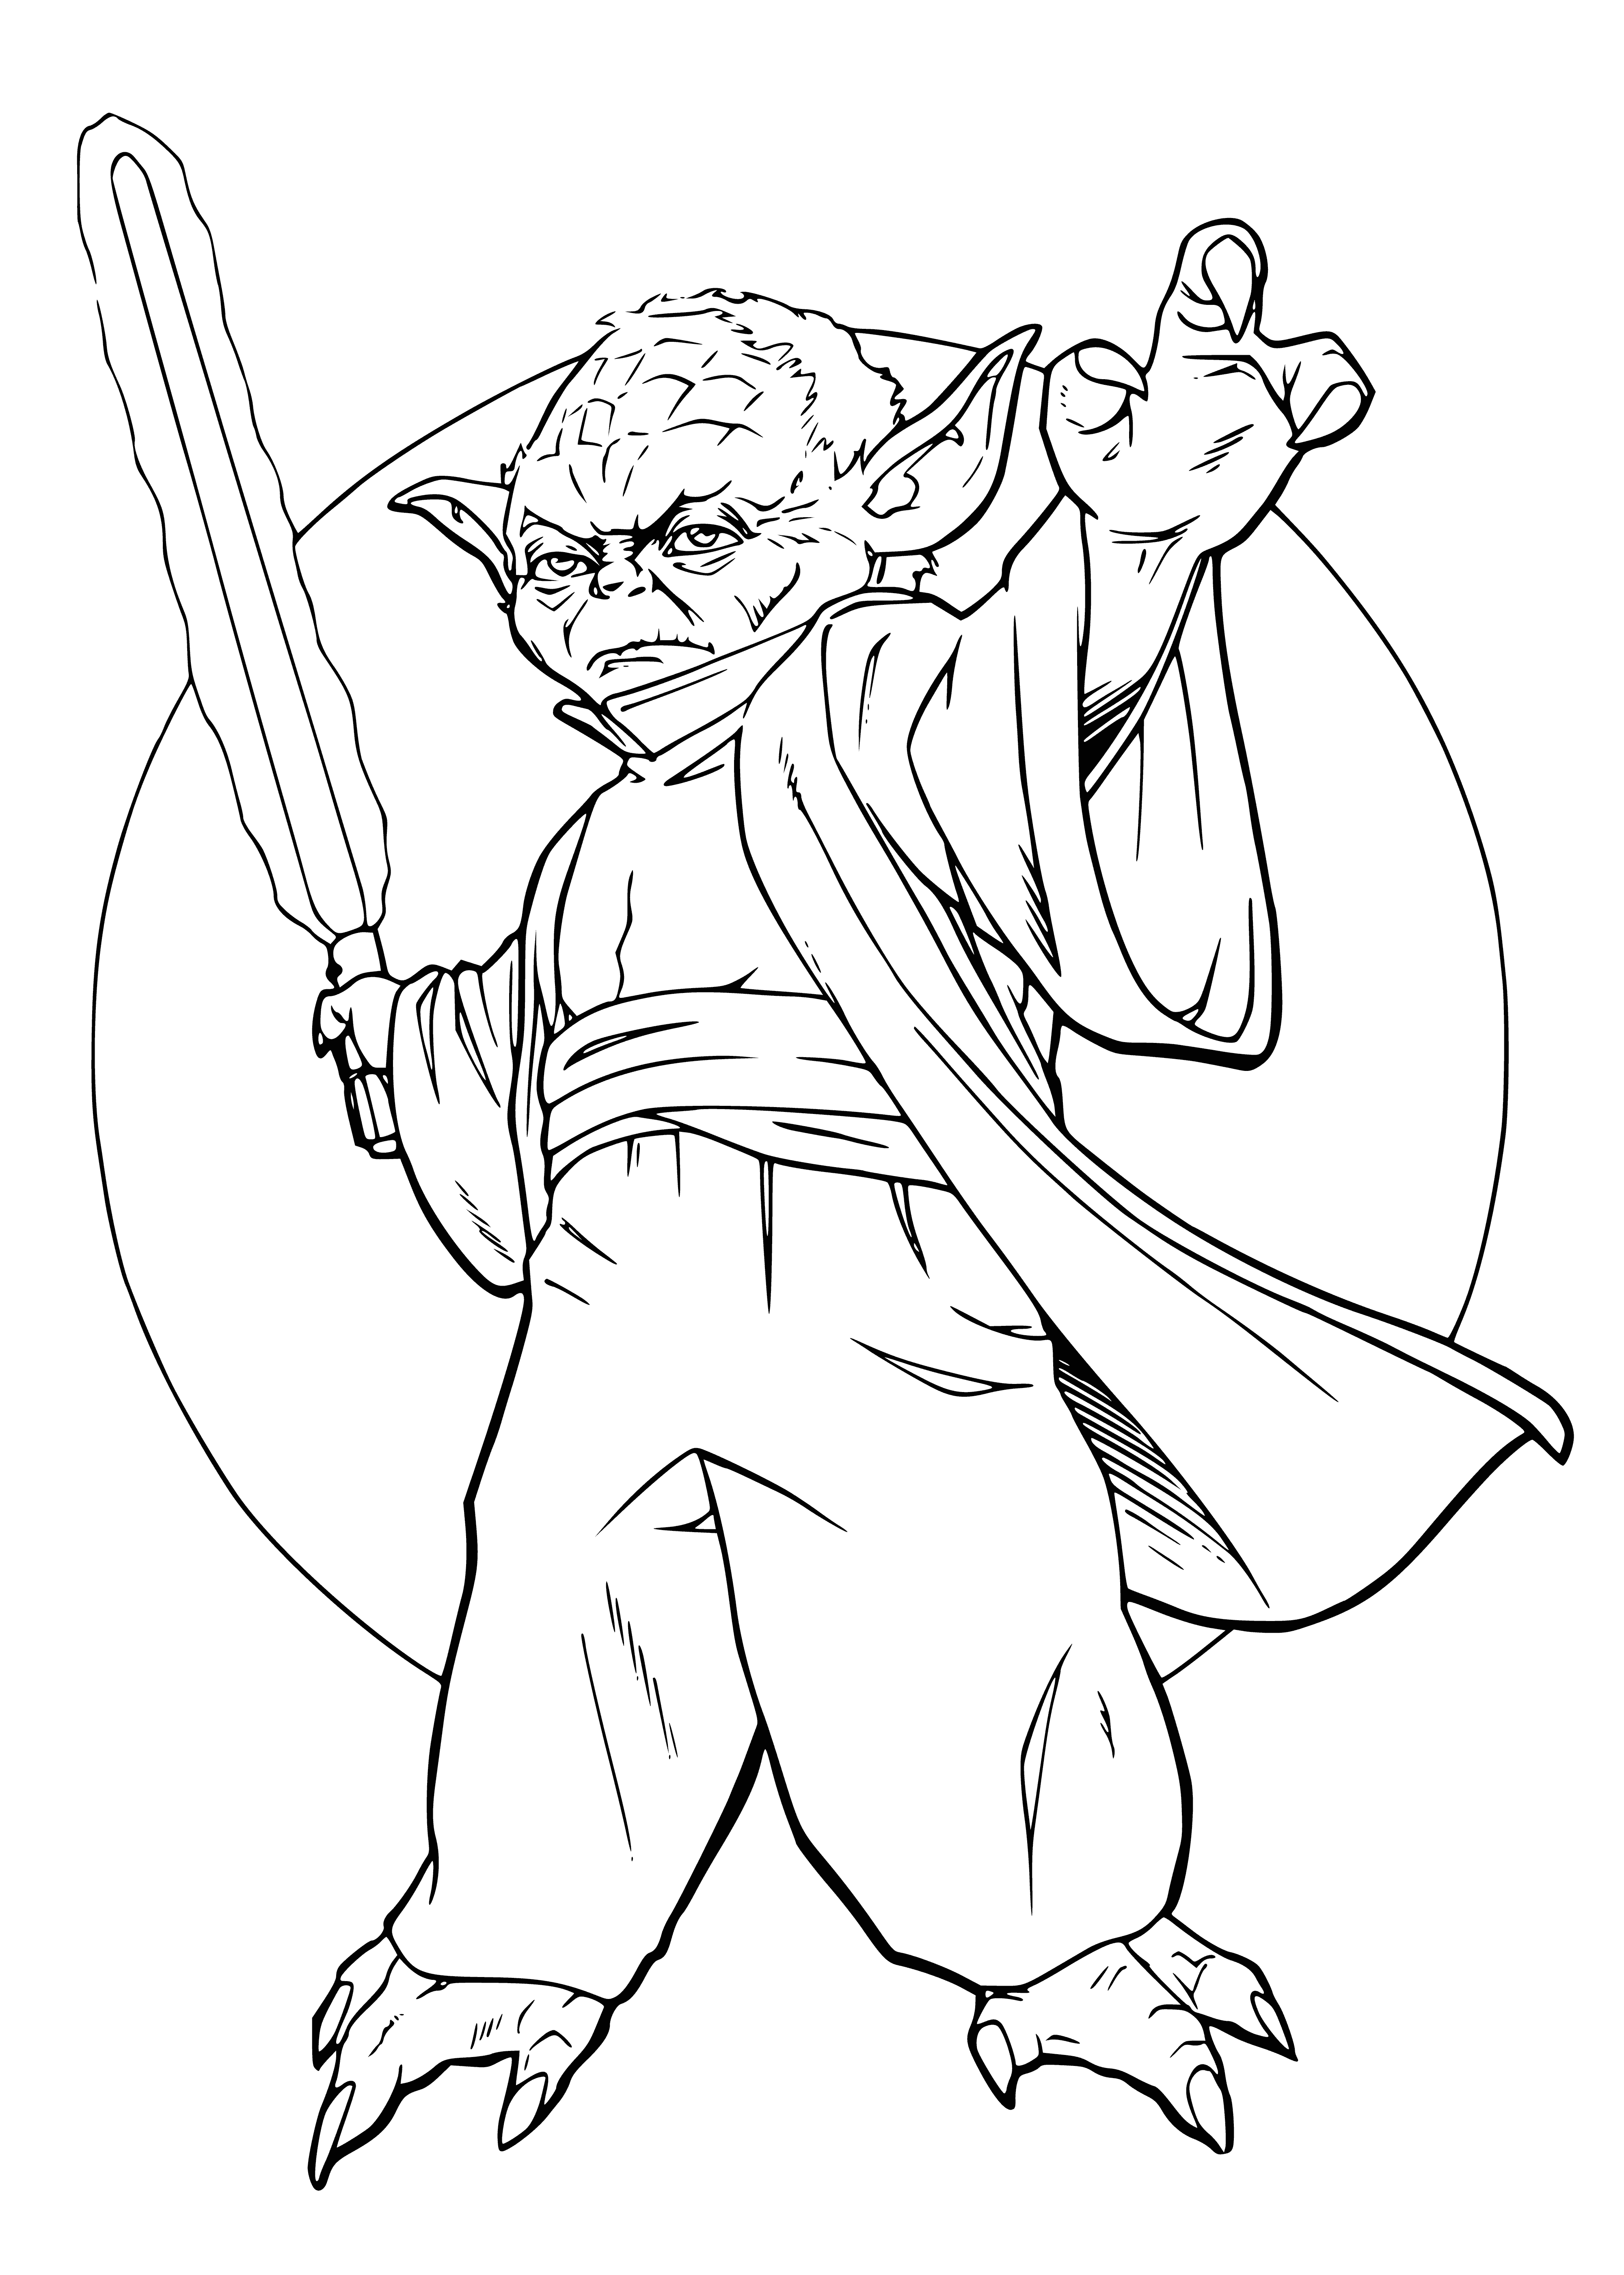 Teacher Yoda coloring page